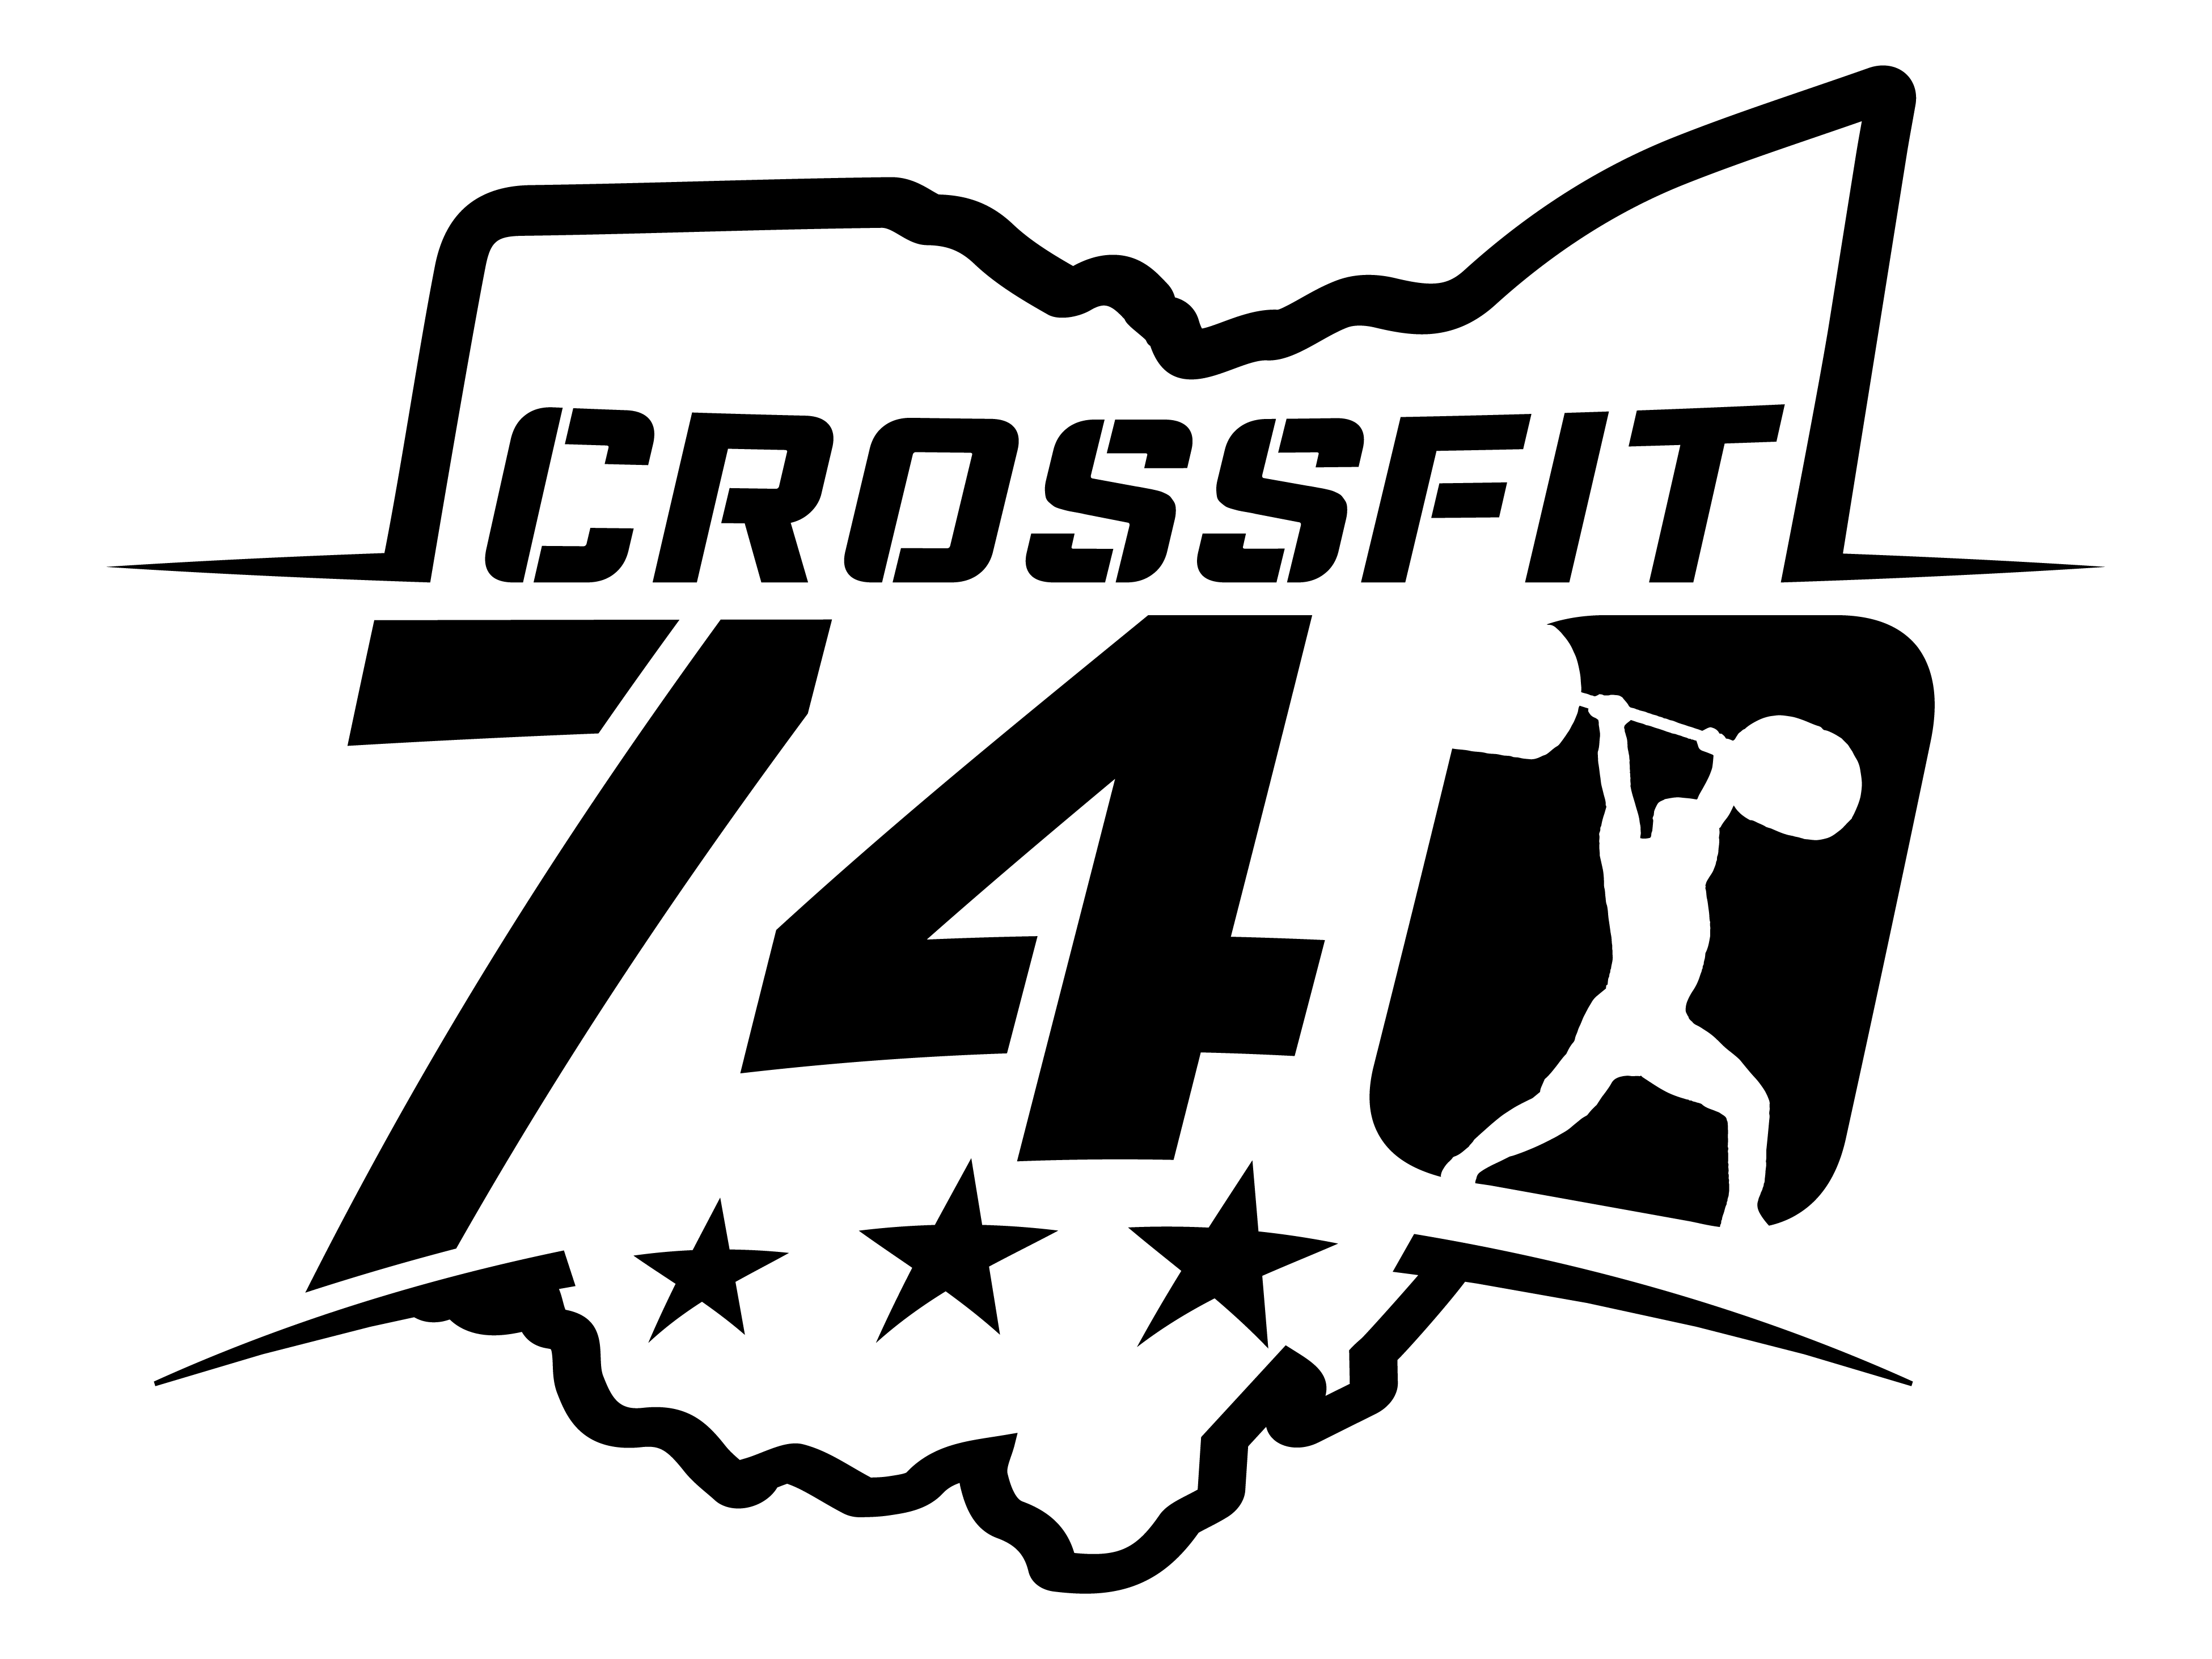 CrossFit 740 logo